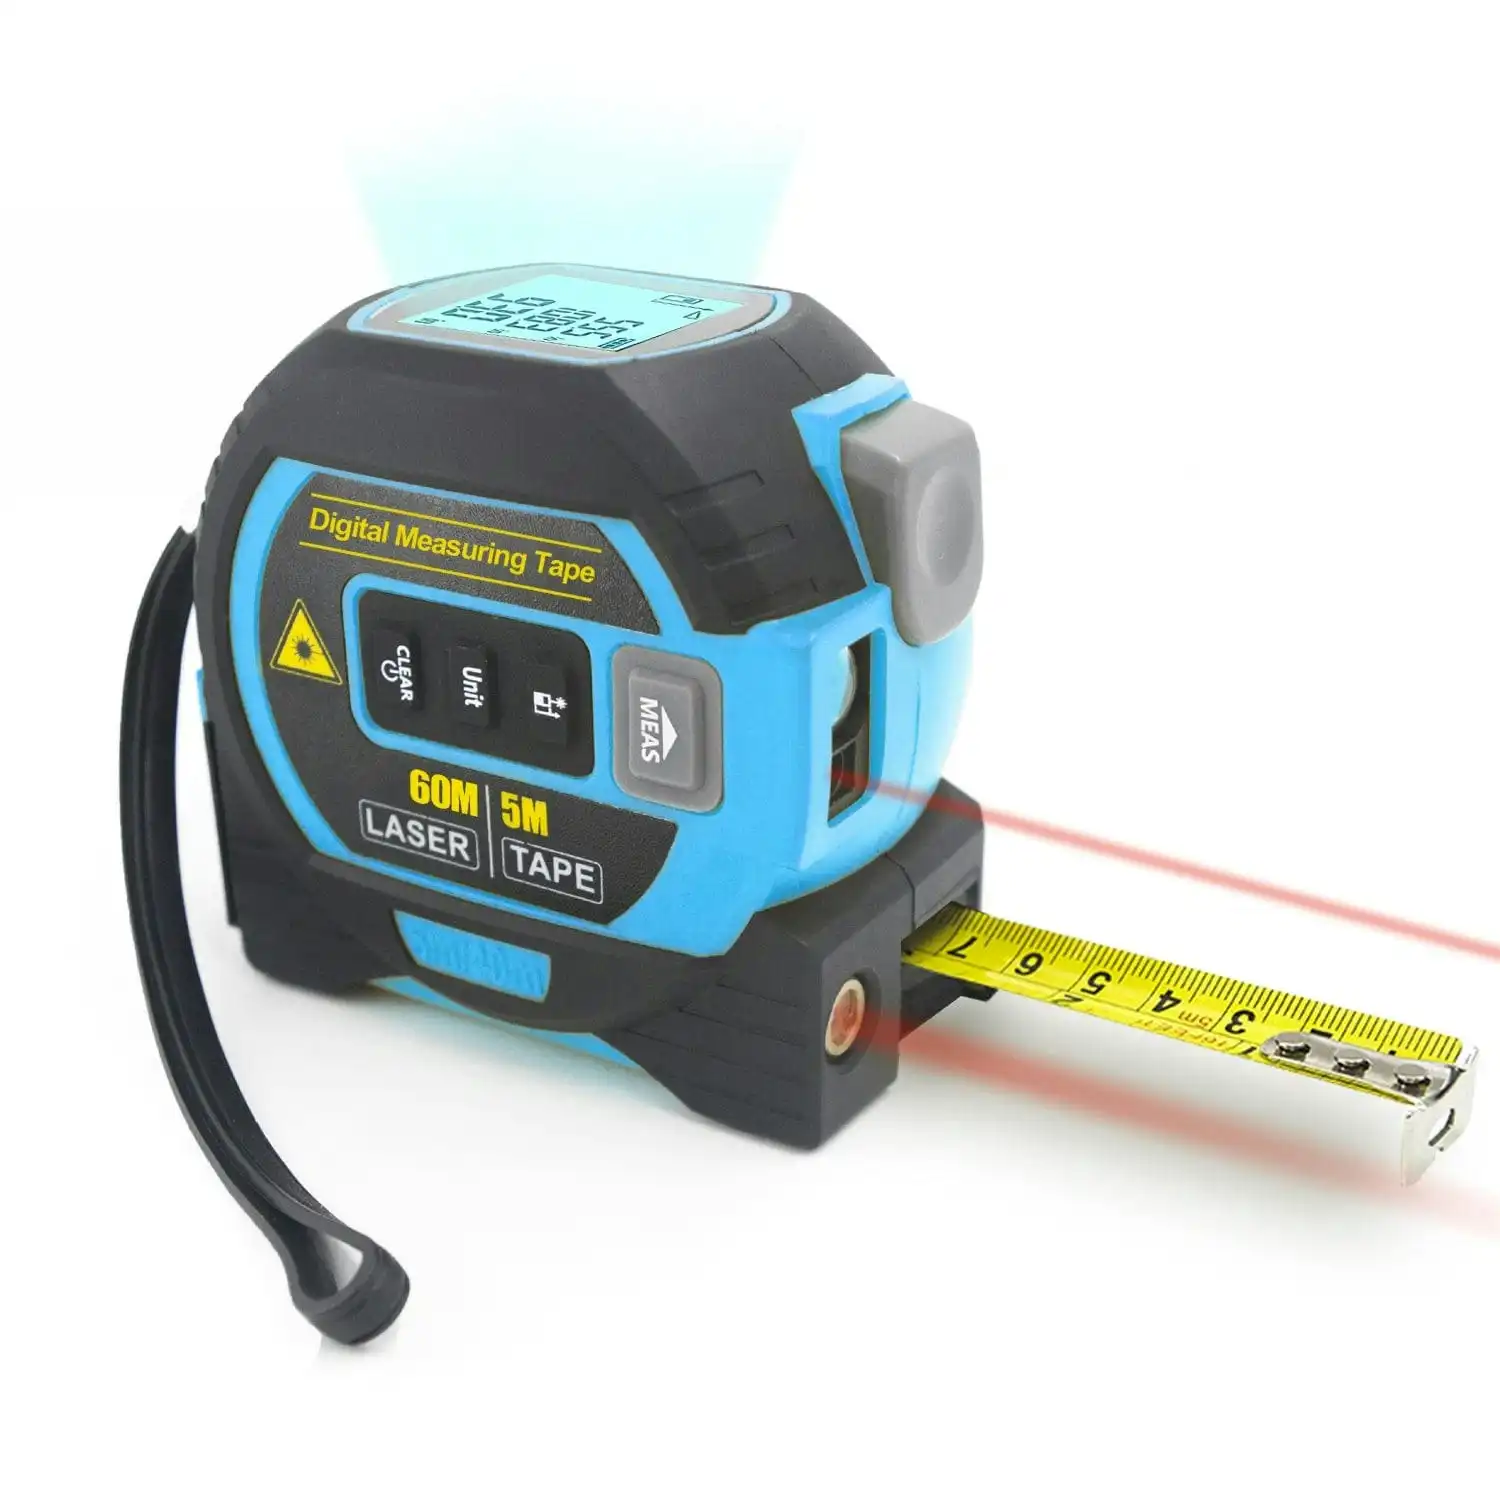 60m Laser Measure, Cross-line Laser Level, 5m Tape Measure Blue